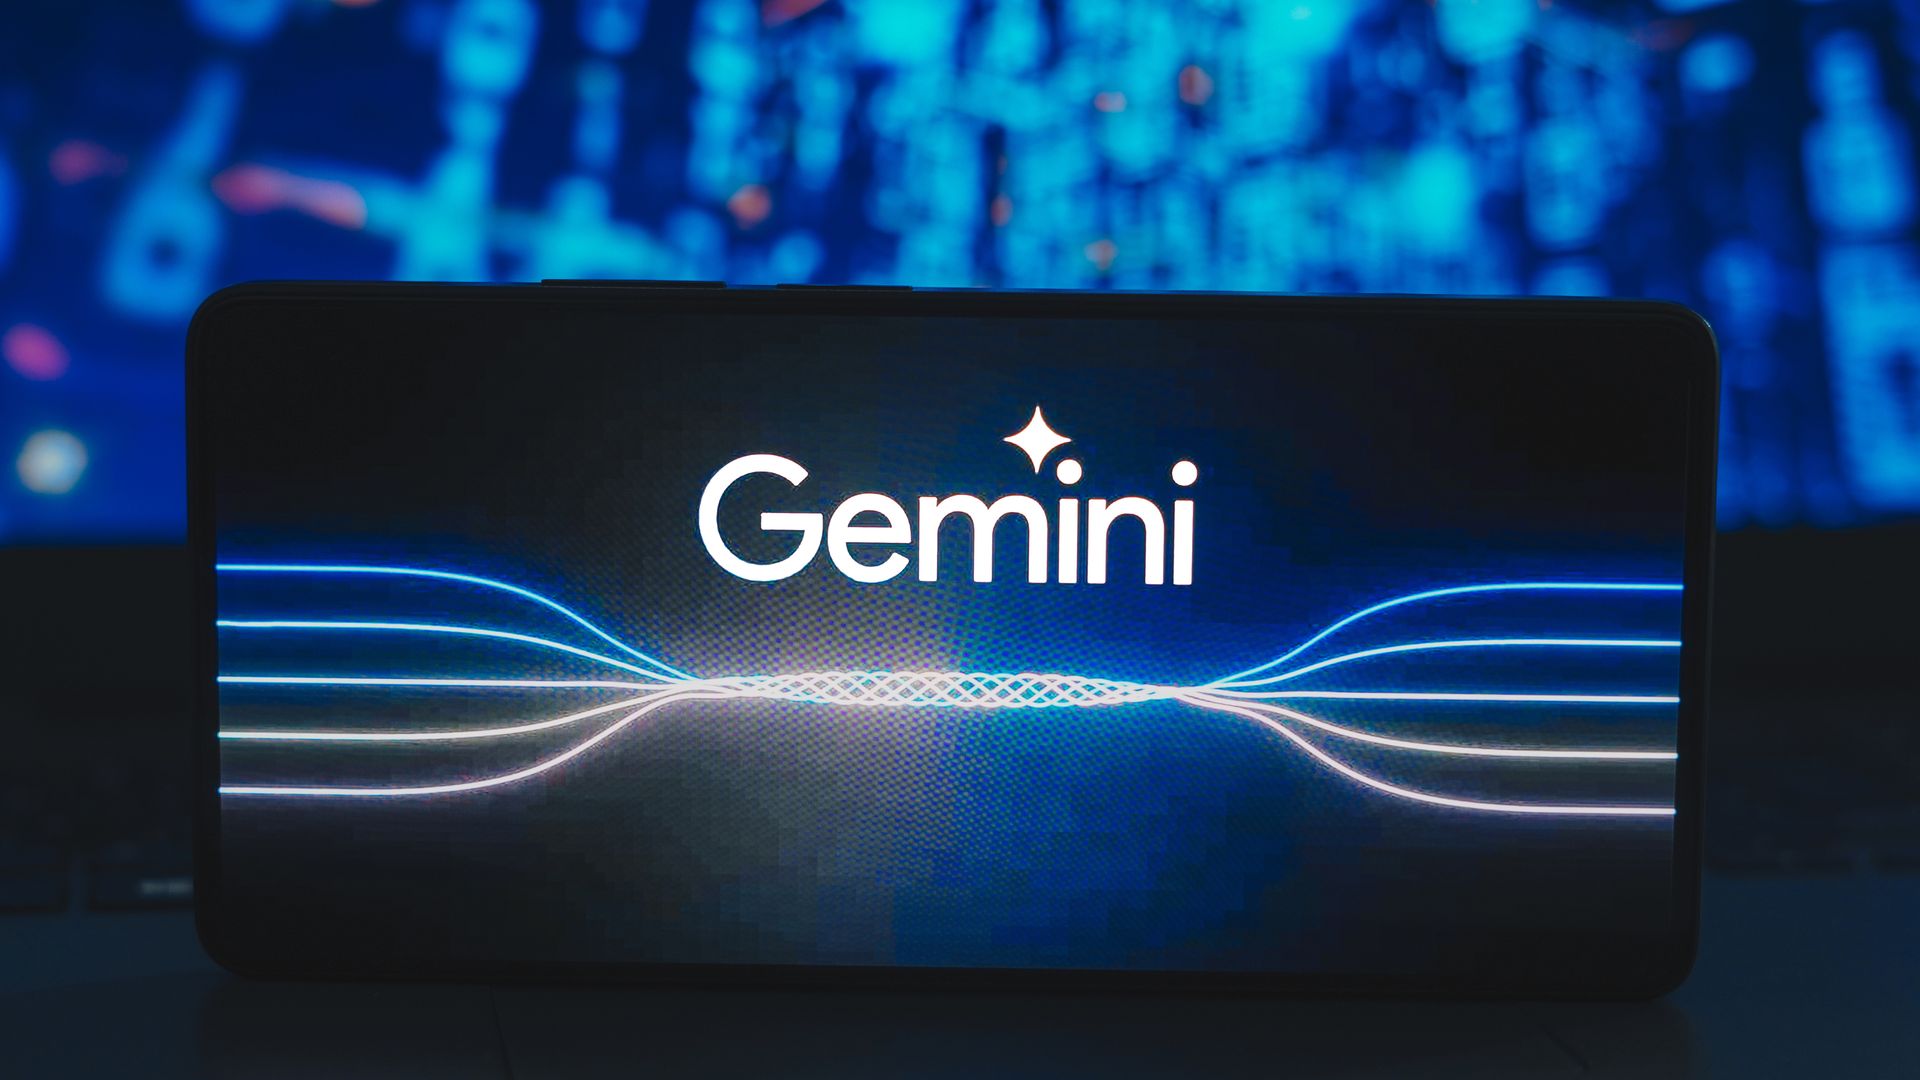 The Google Gemini logo